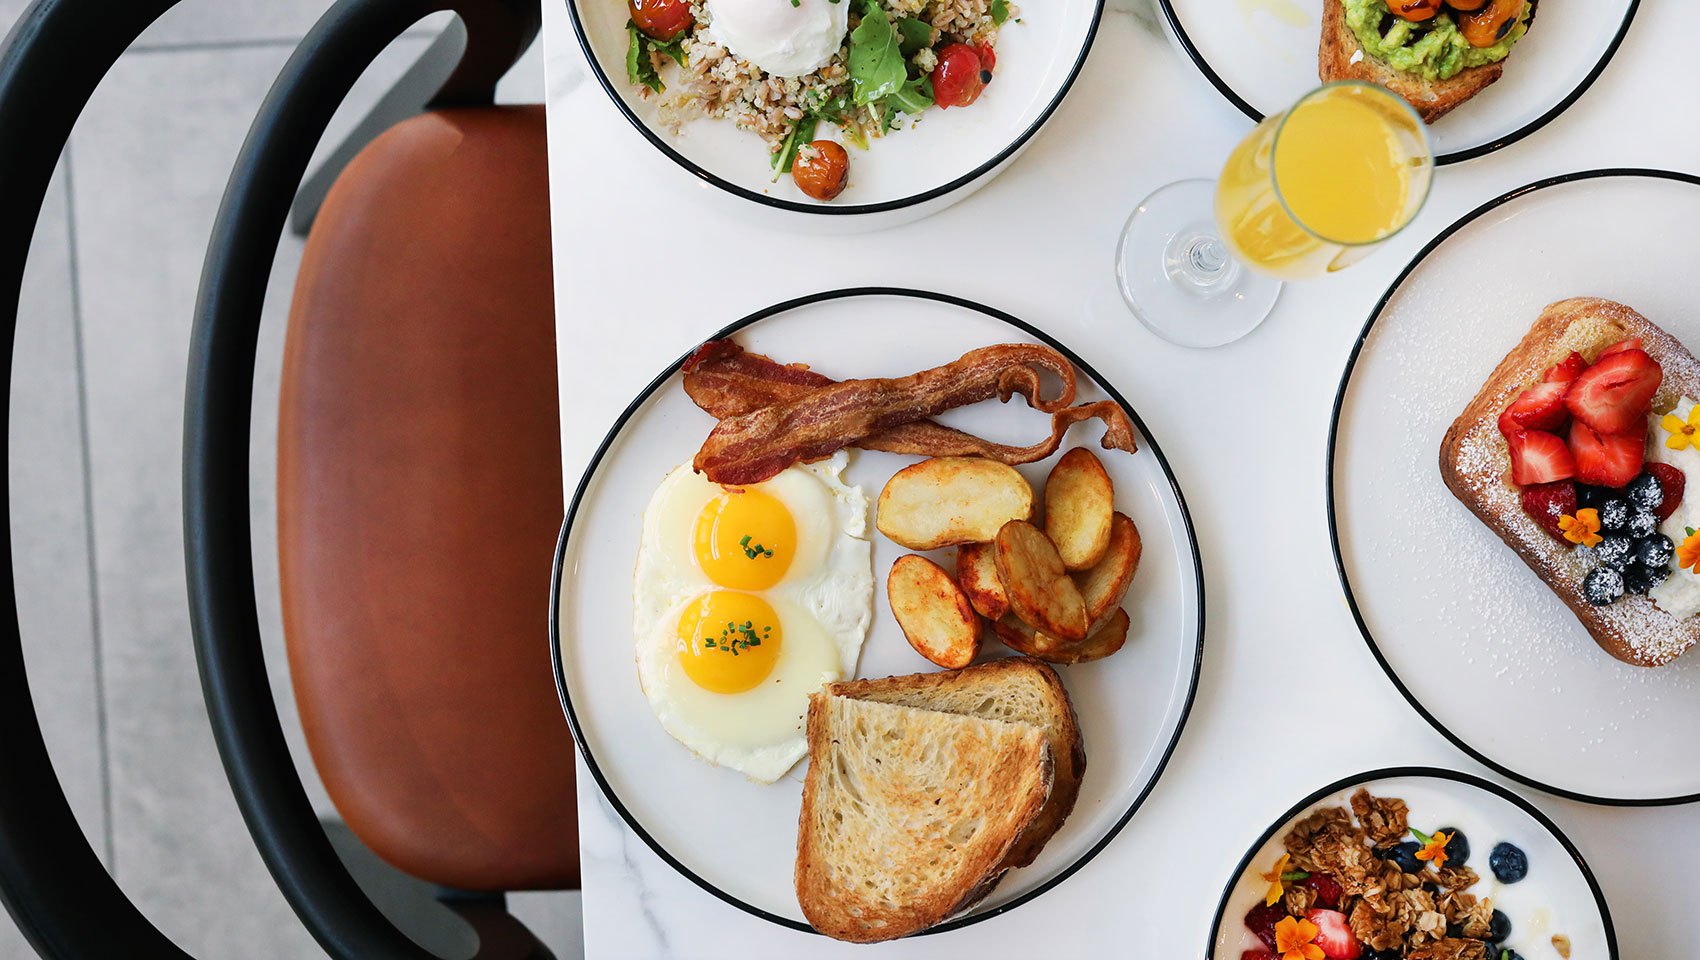 Multiple breakfast plates, including the quinoa bowl, avocado toast, brioche french toast, and yogurt dish.